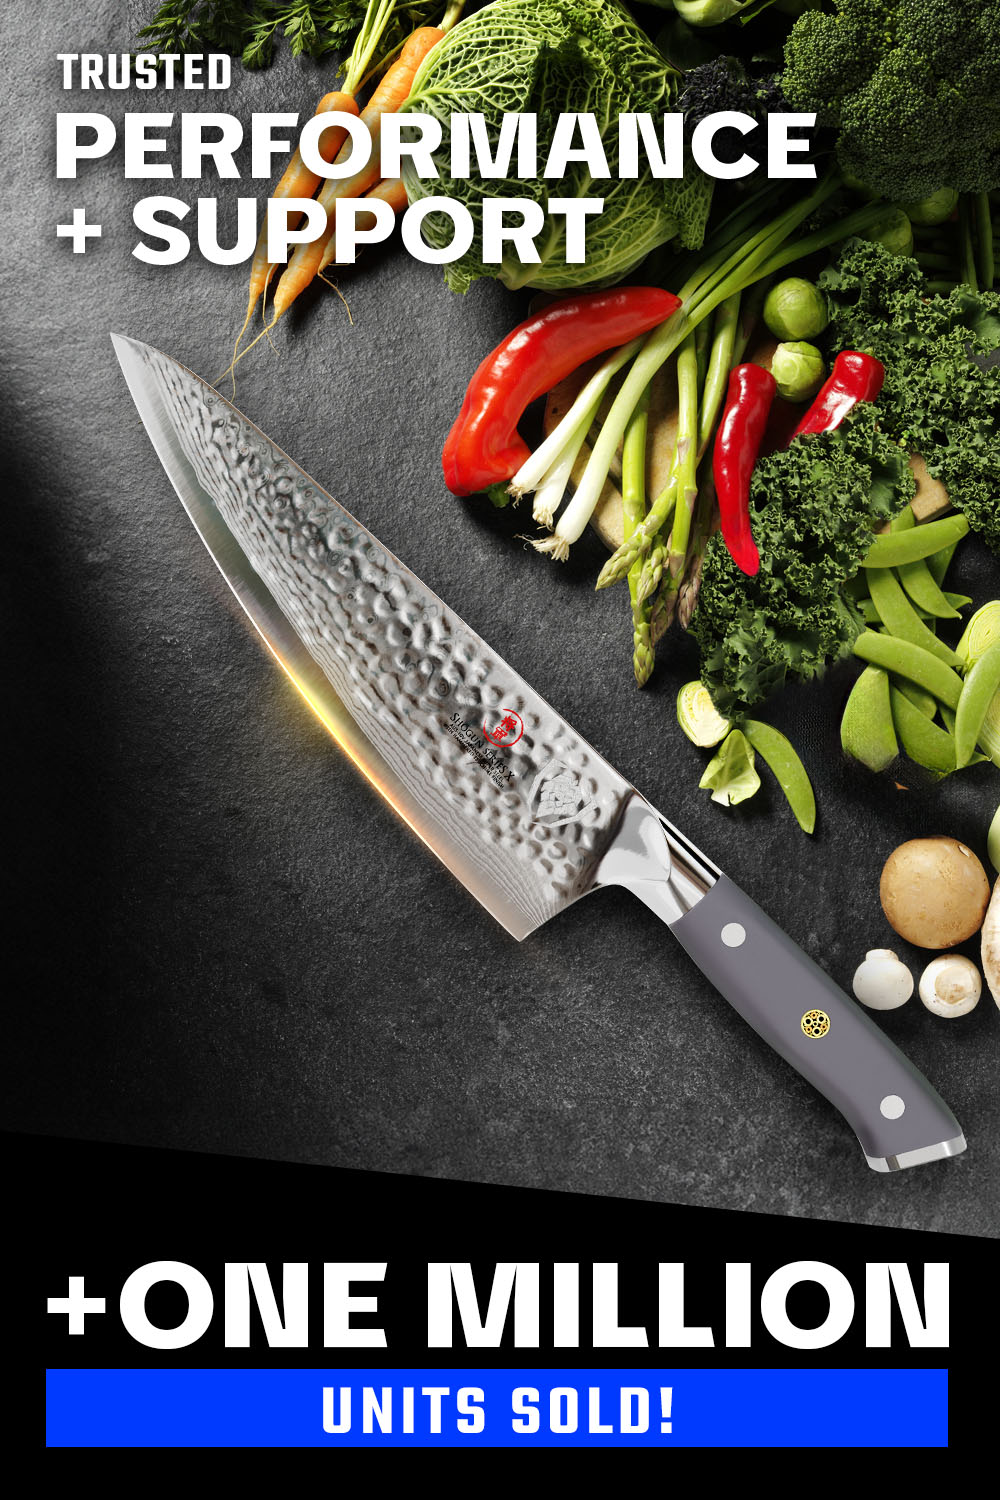 Chef Knife 8" | Gray Matte ABS Handle | Shogun Series X | Dalstrong ©